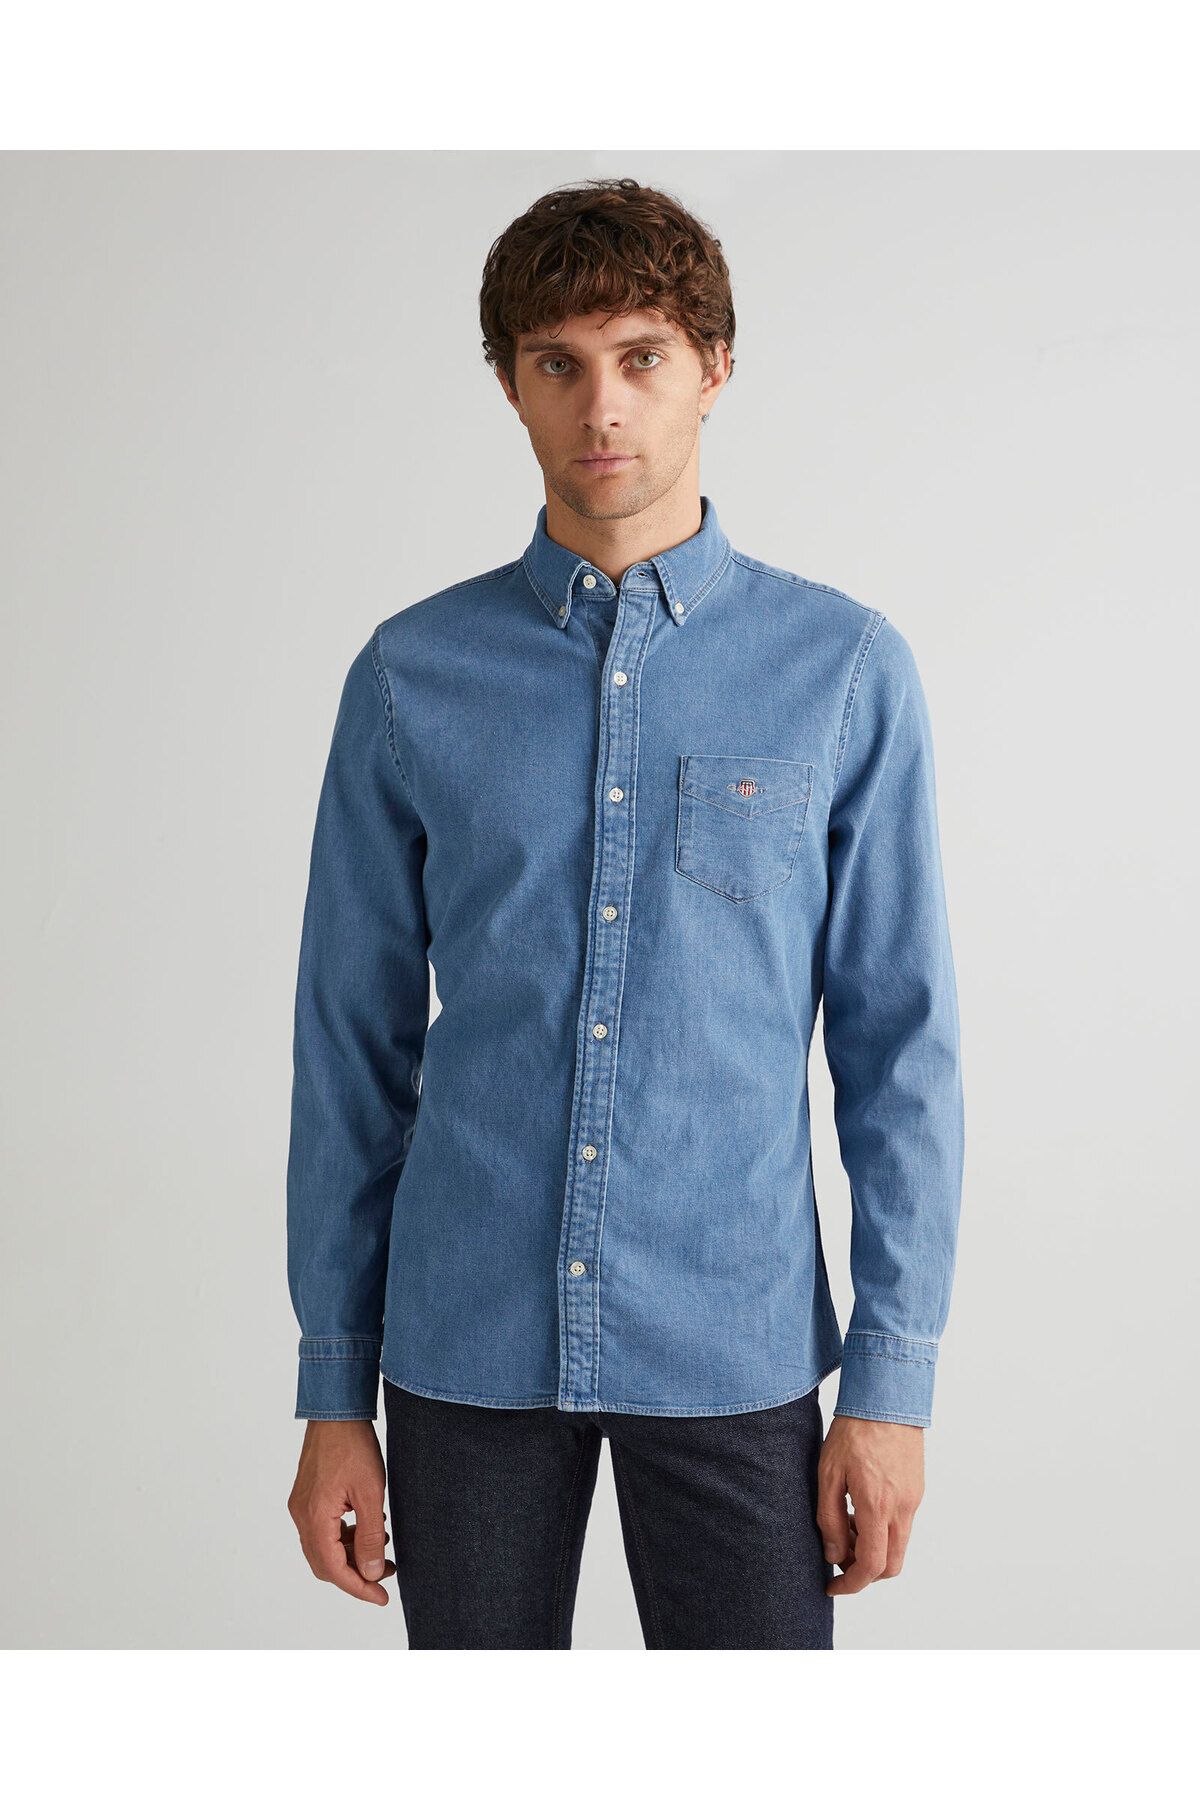 Gant Erkek Mavi Slim Fit Düğmeli Yaka Gömlek